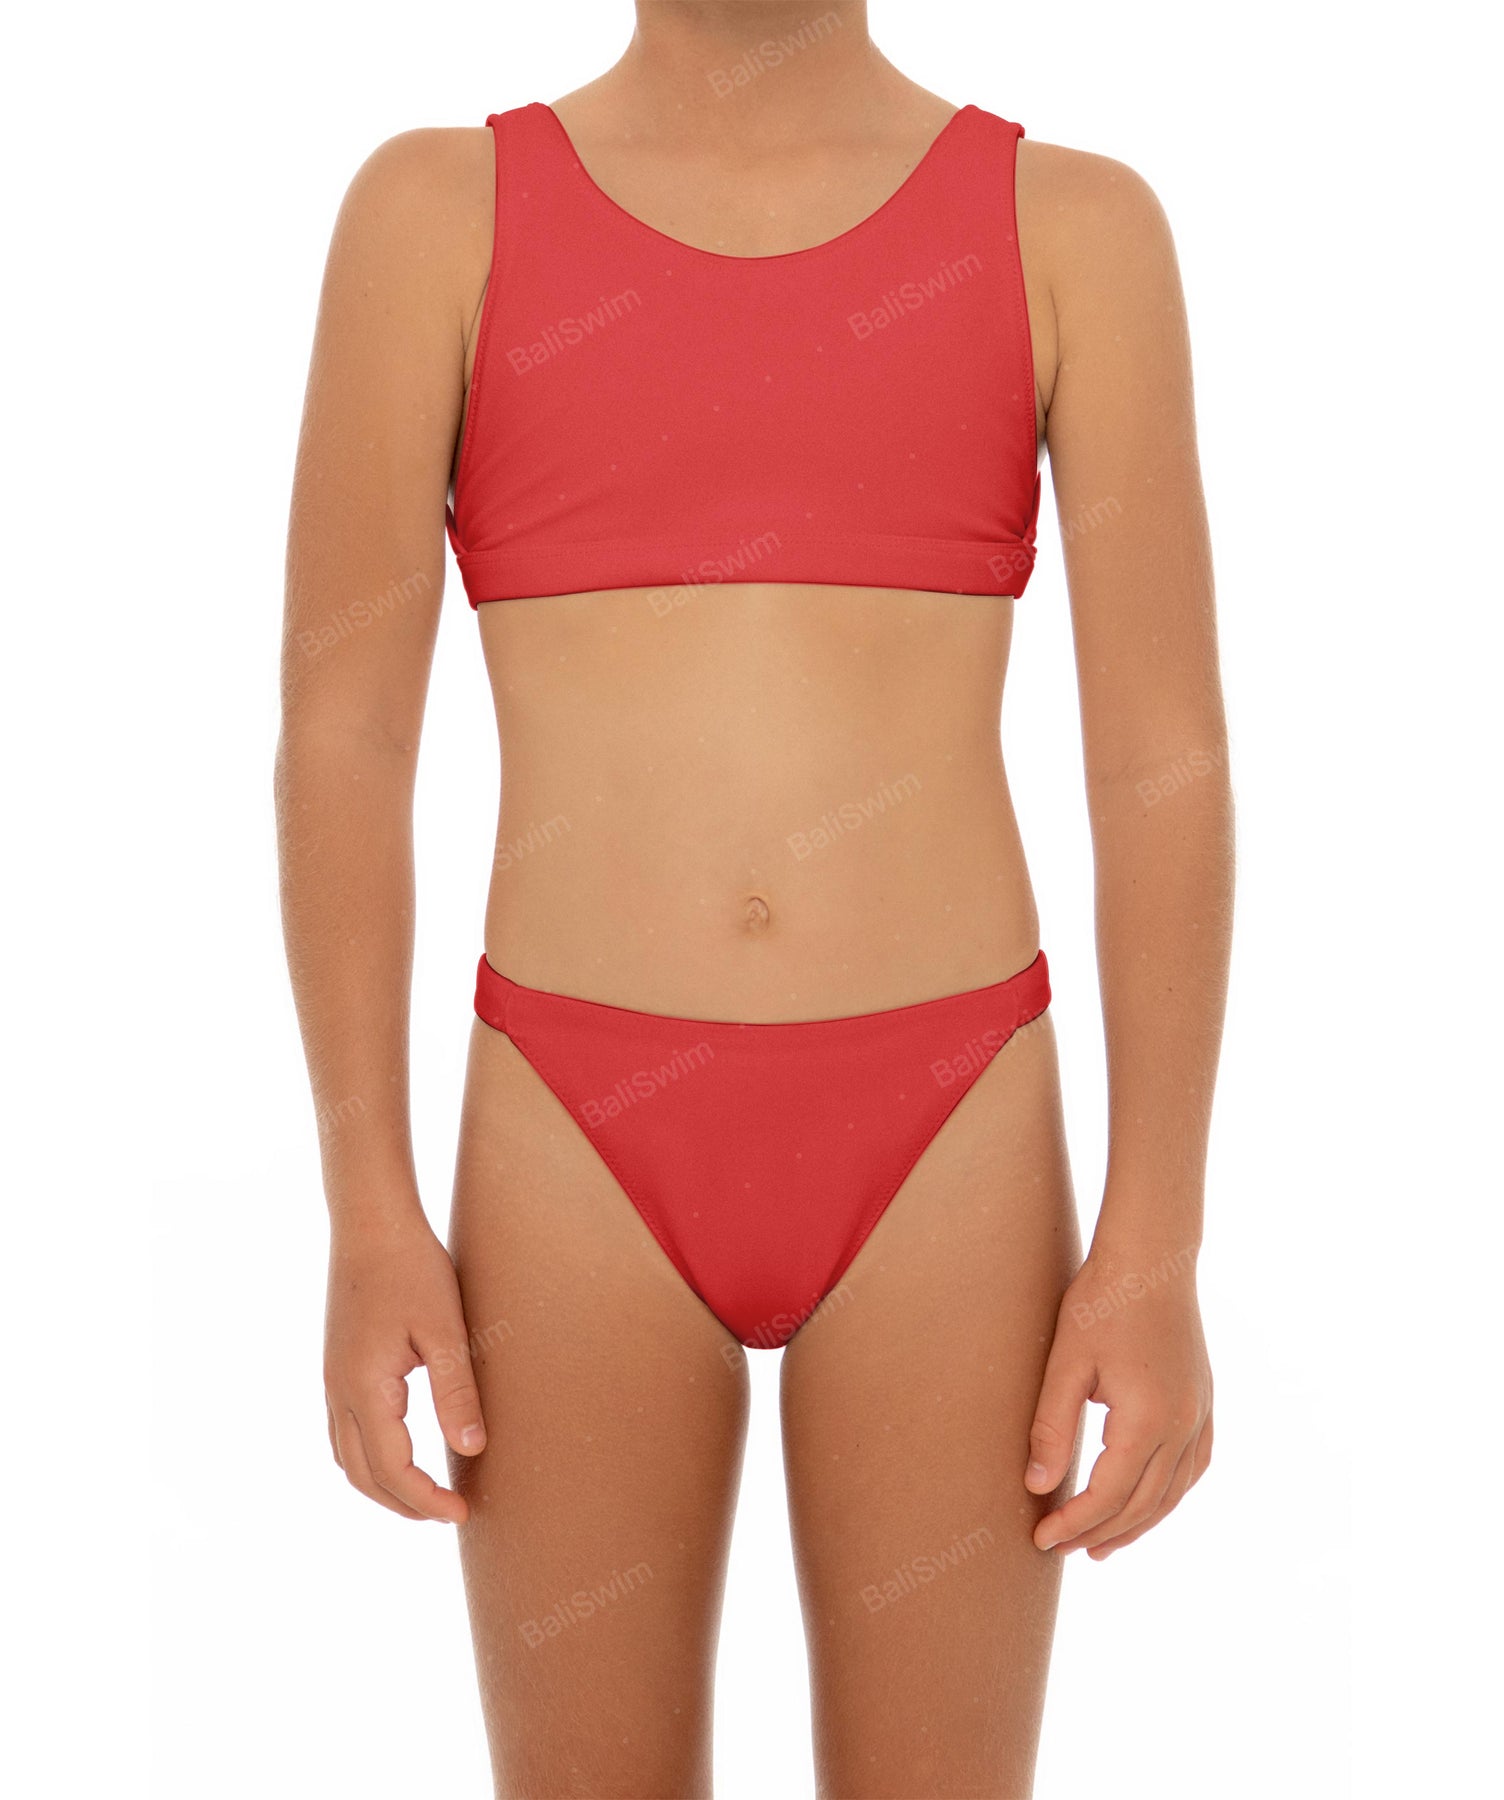 High Waist Scrunch Bikini Hot Pants - Matte Spandex - Several Color Options